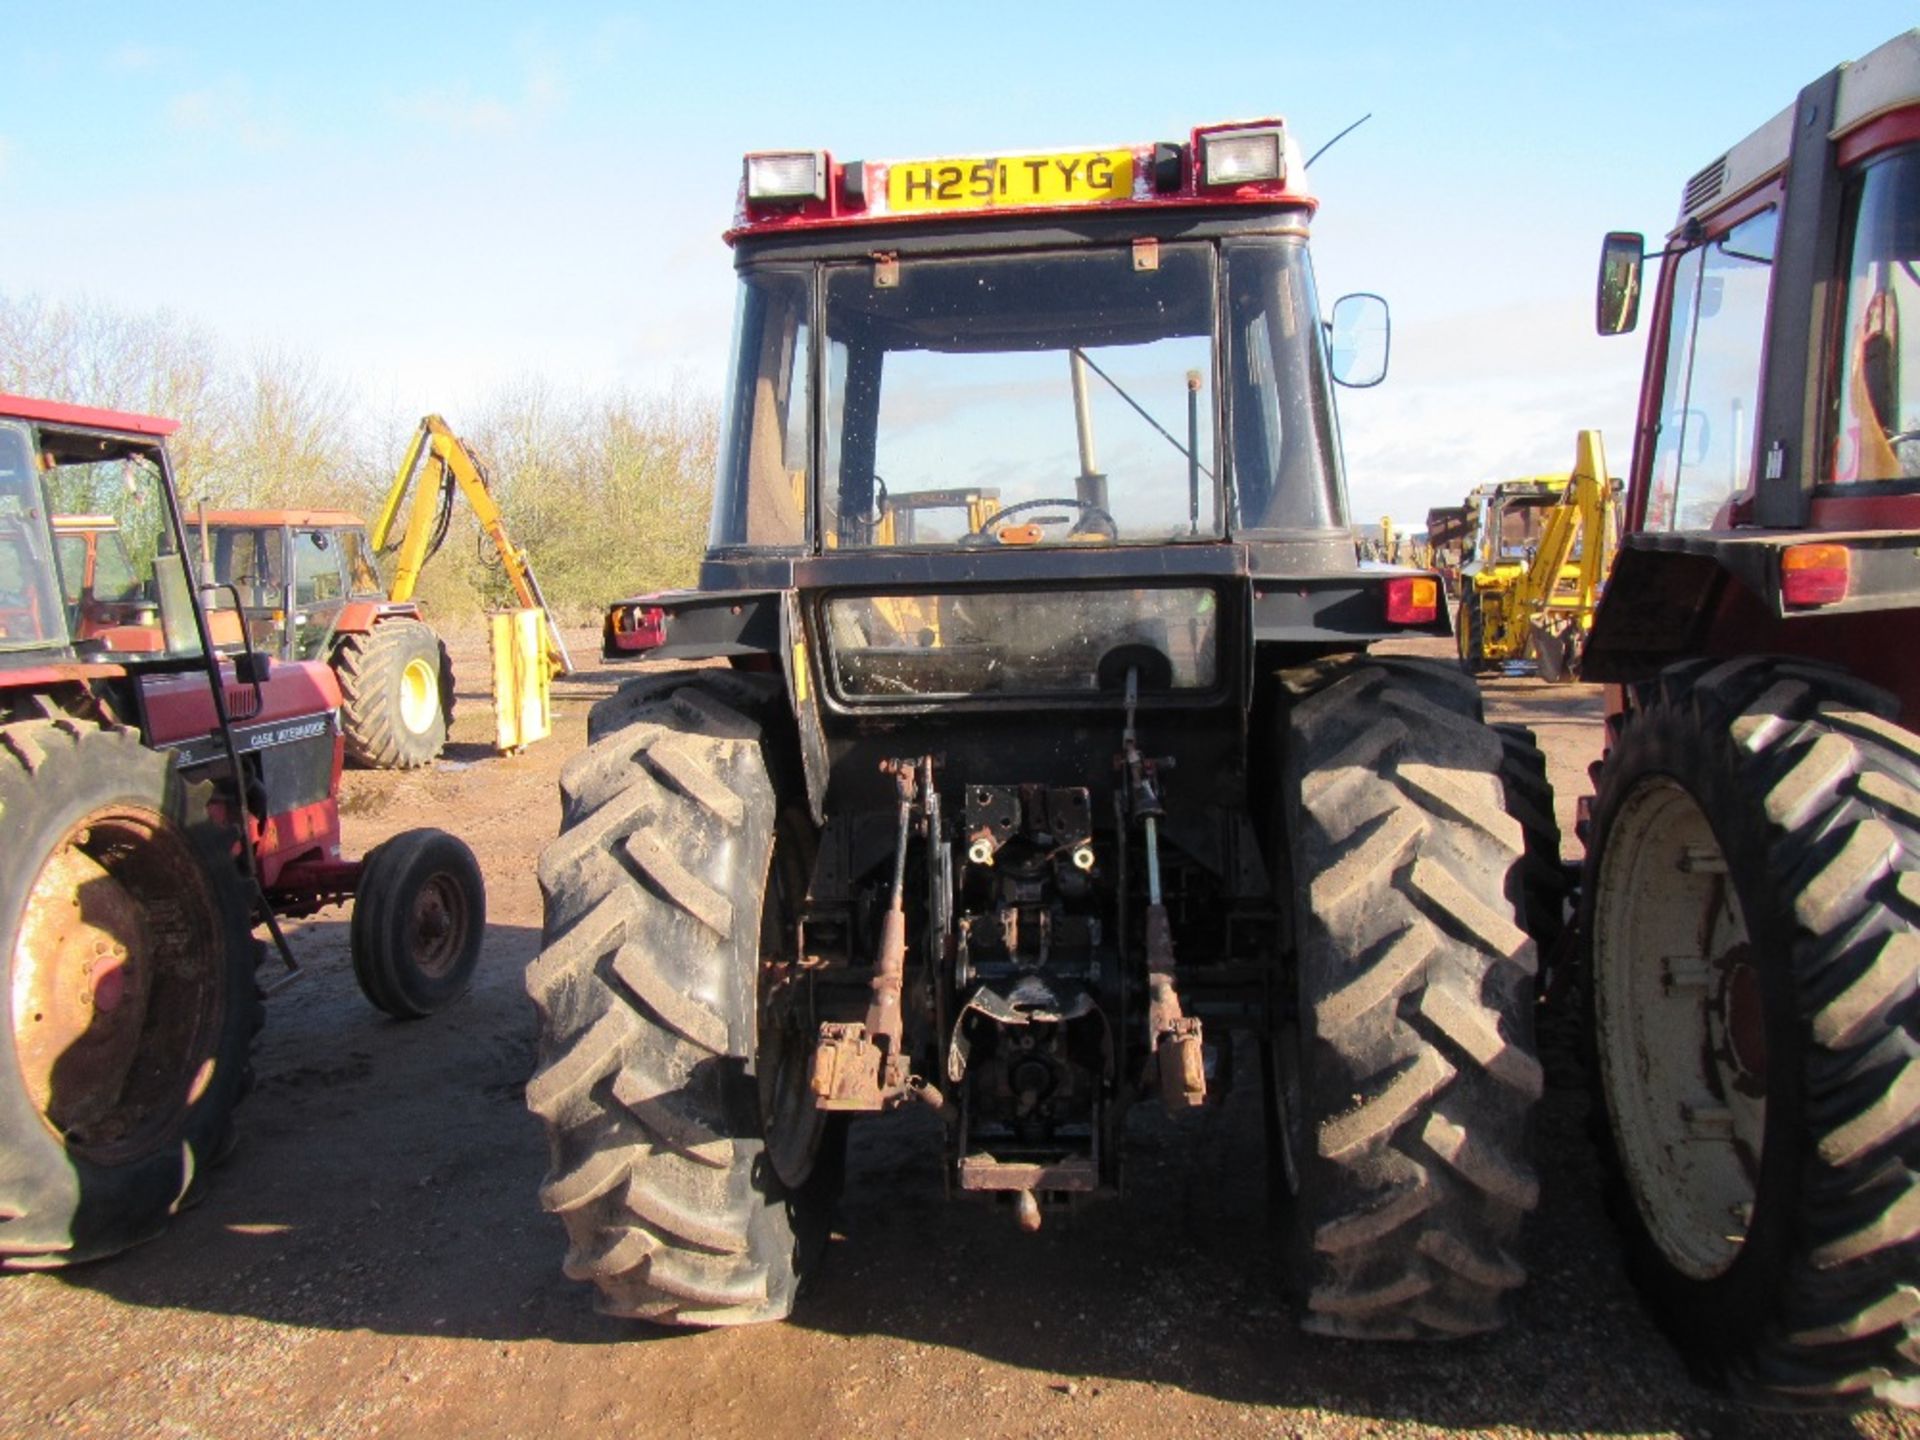 Case 895XL 2wd Tractor. Reg. No. H251 TYG. Ser. No. JJE0008308 - Image 4 of 10